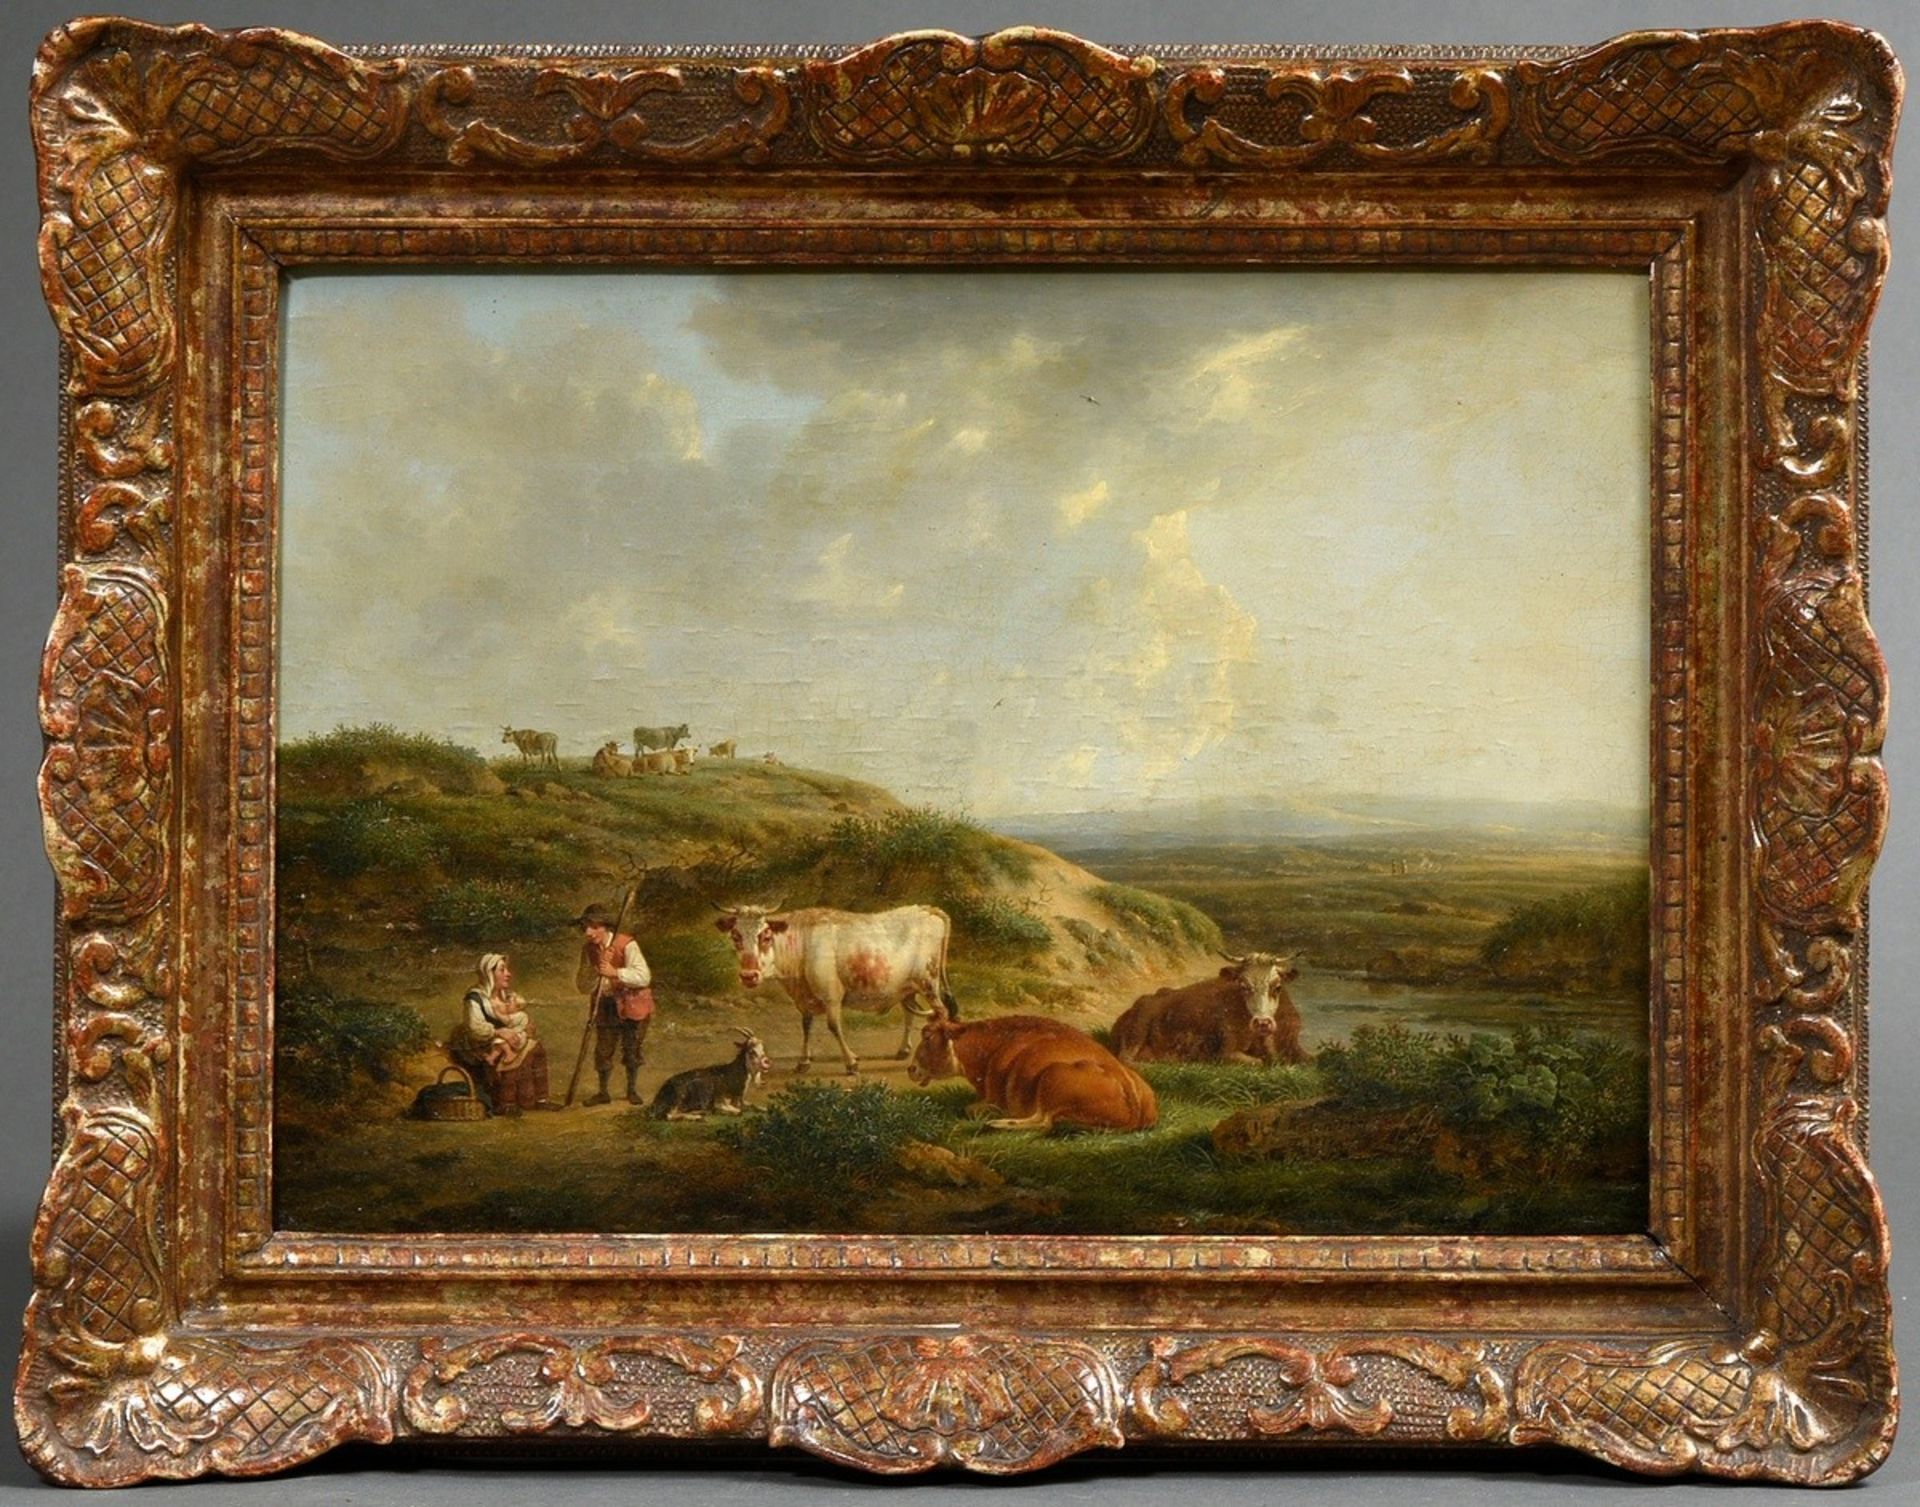 Antonissen, Henricus Josephus (1737-1794) "Landscape with Shepherds and Their Herd" 1779, oil/wood, - Image 2 of 7